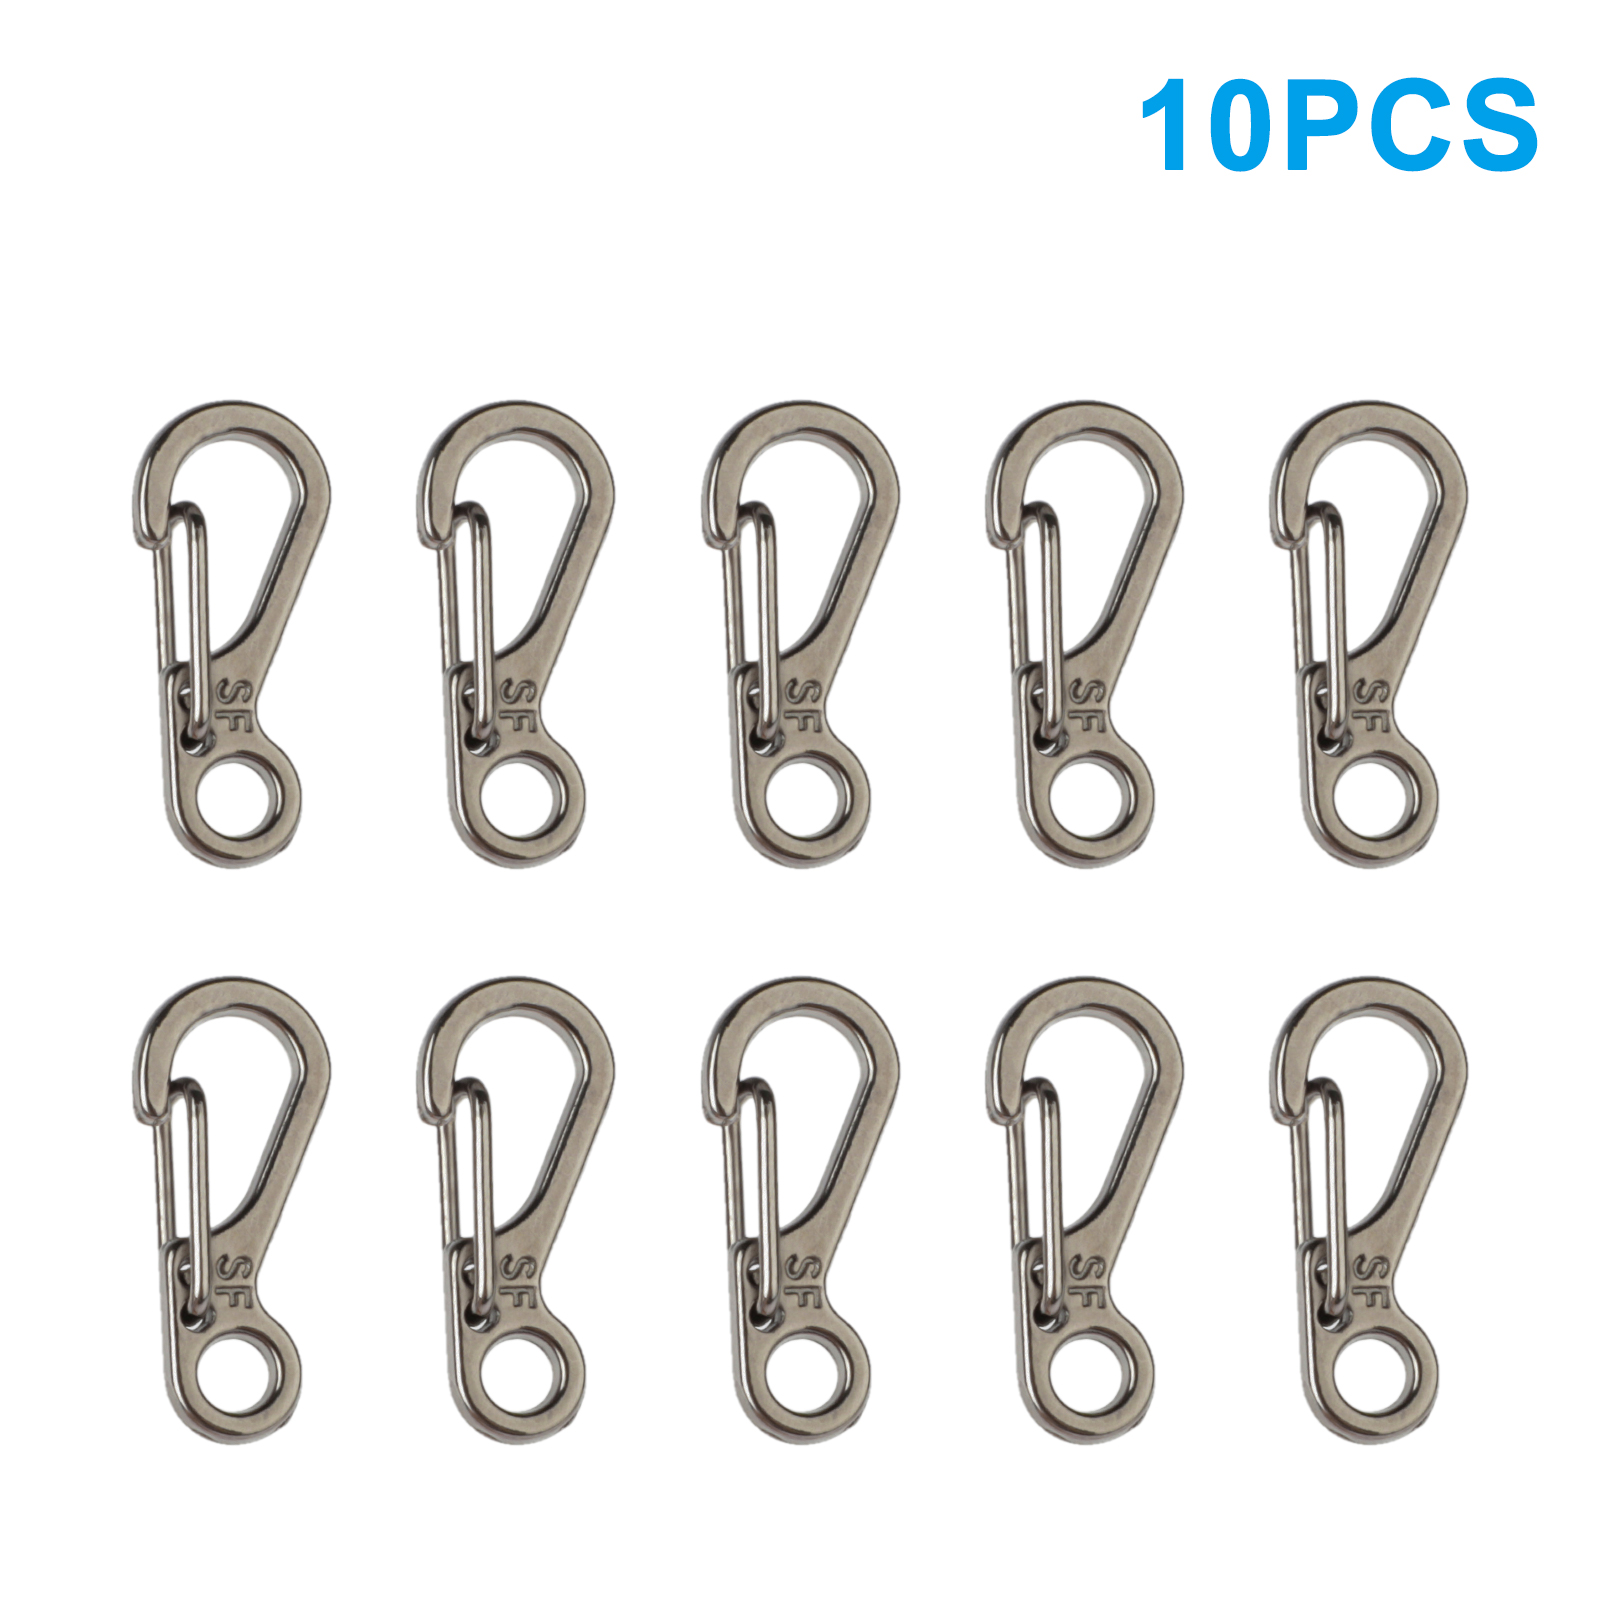 Details about   10PCS Mini Heavy Duty Aluminum Carabiner Key Chain Snap Hooks Clip Camping 